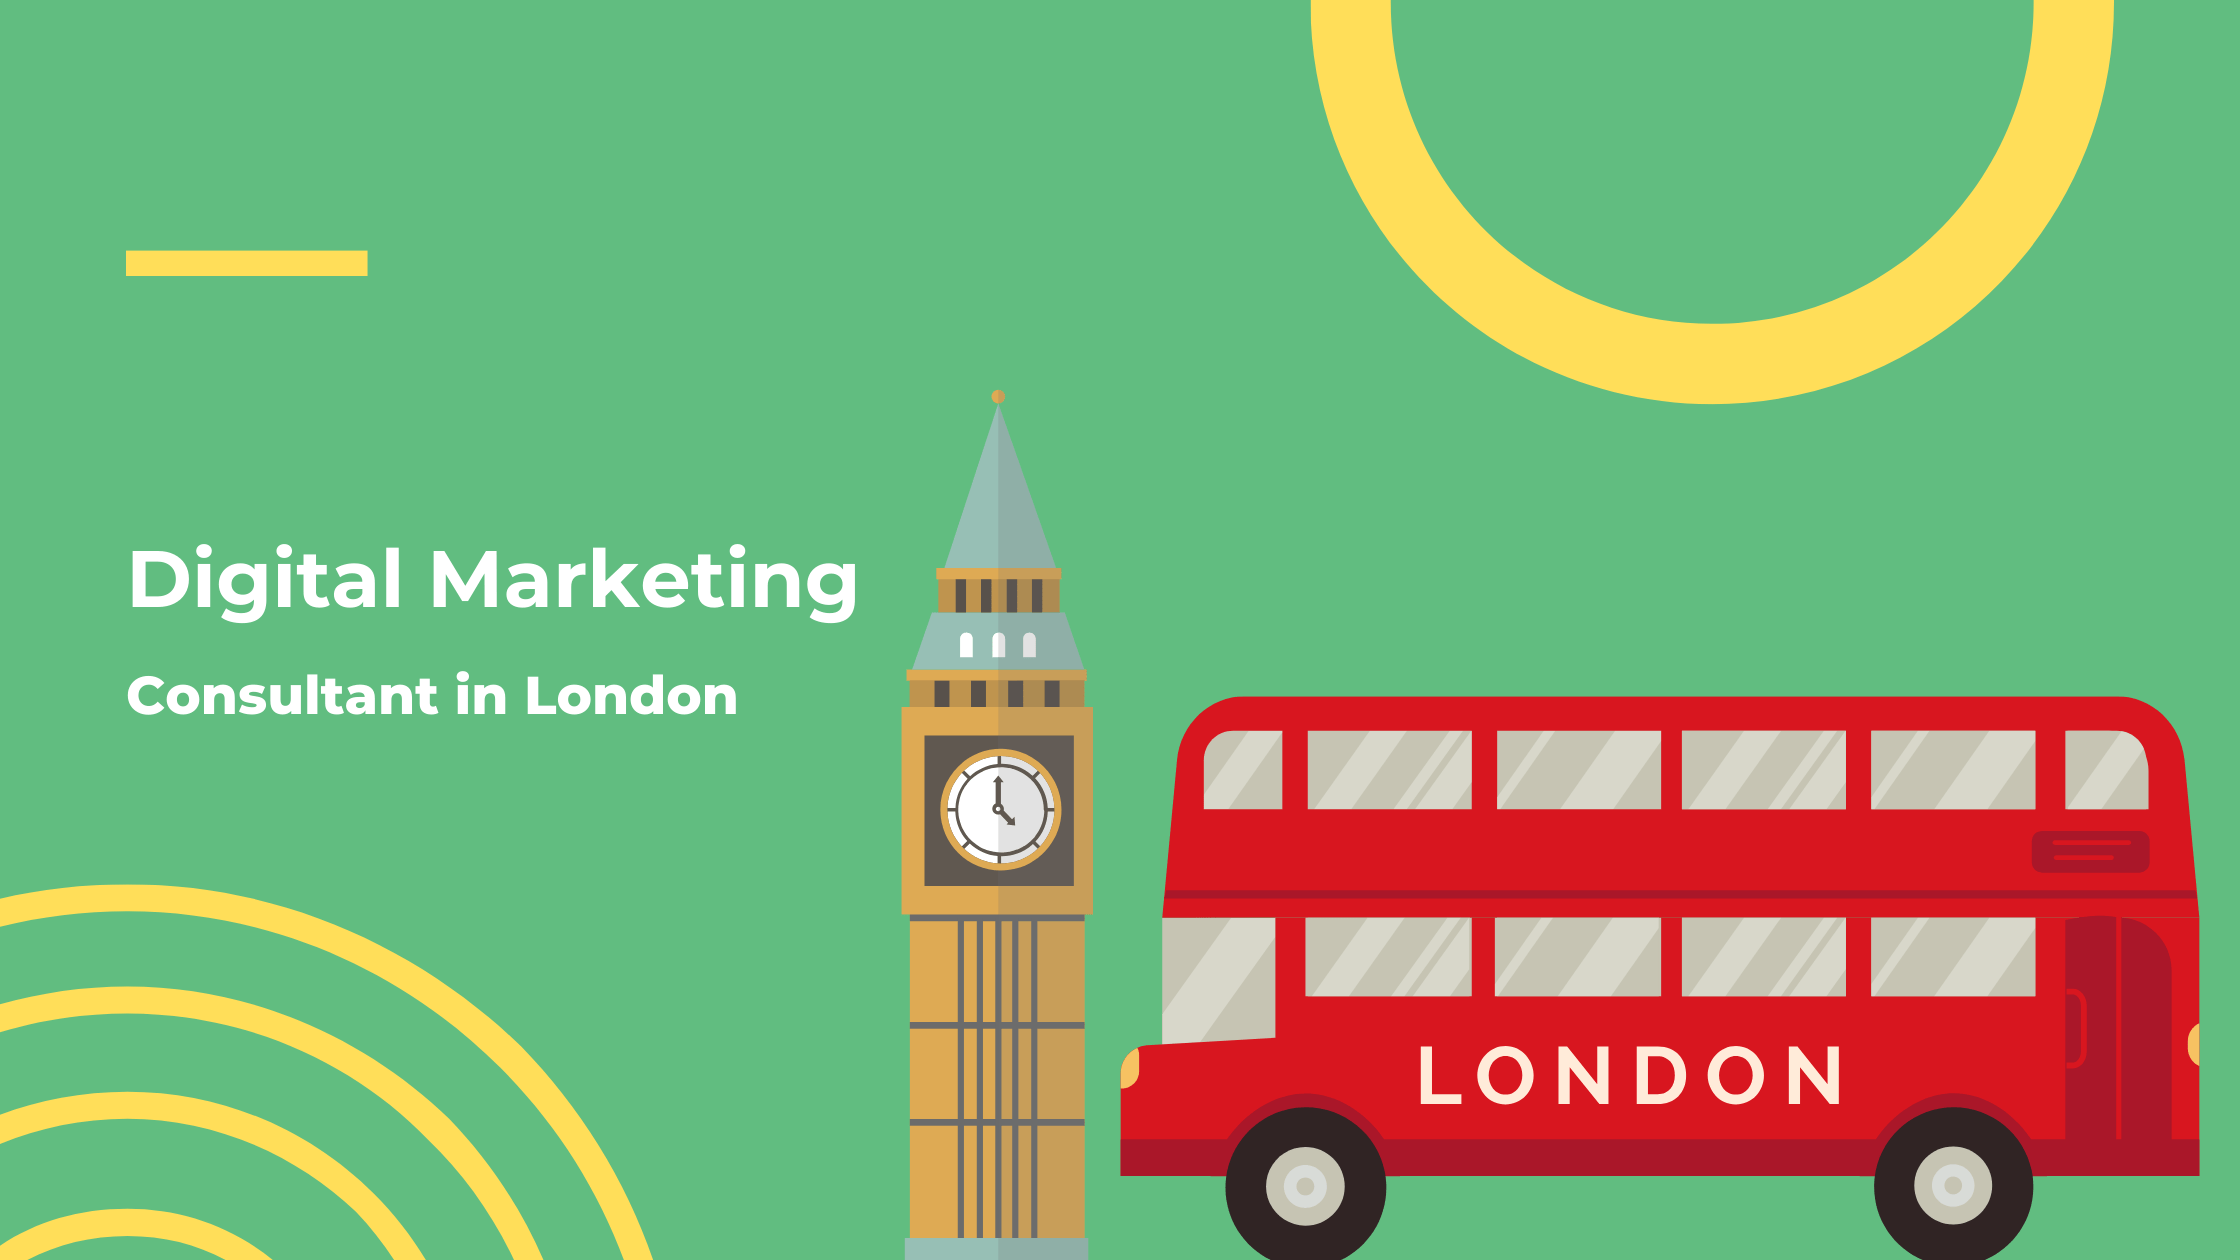 London Digital Marketing Consultant